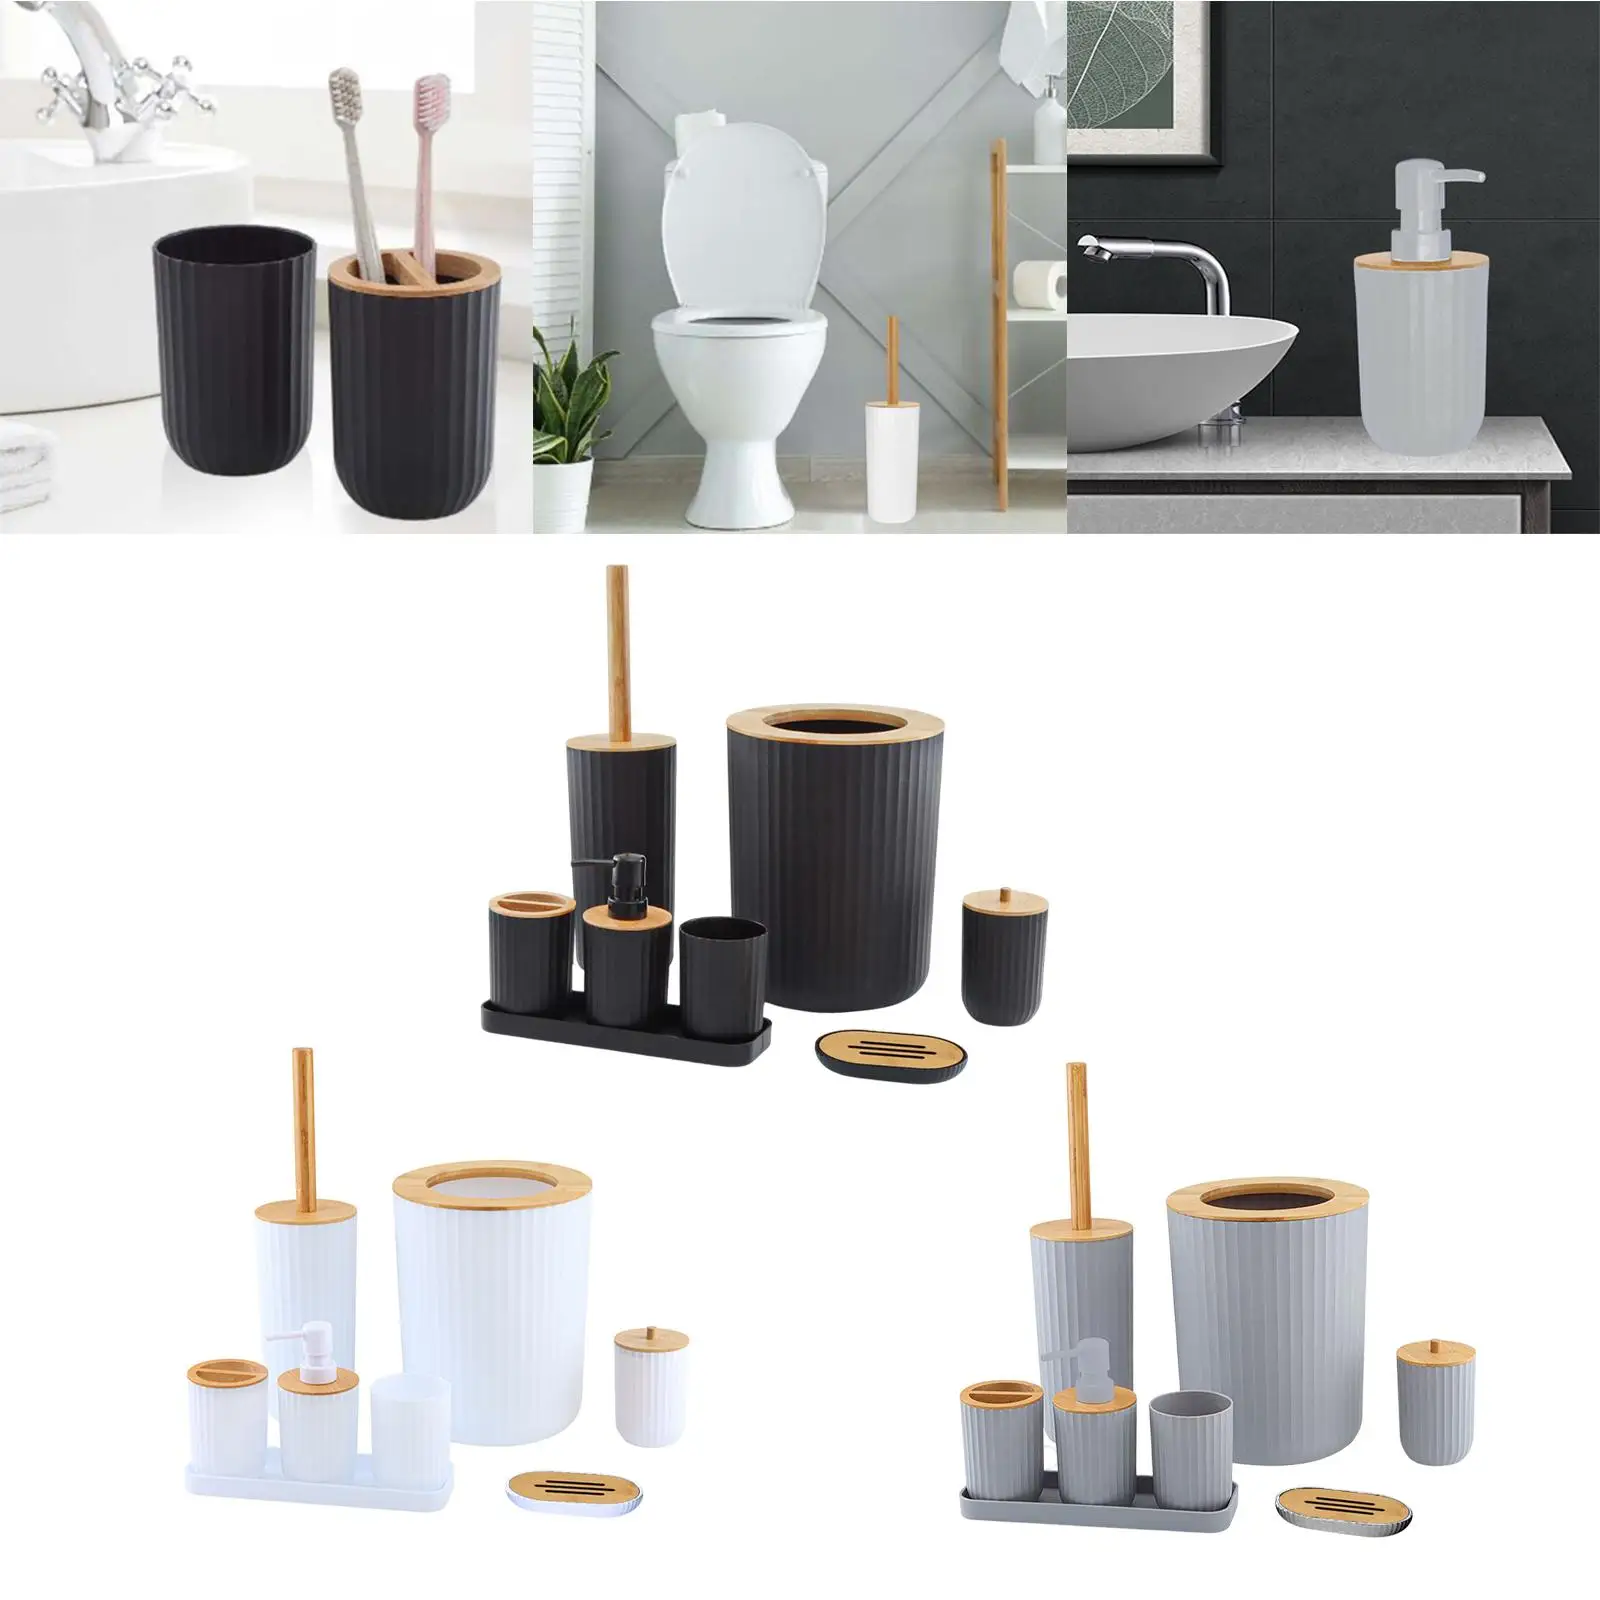 7 Pieces Simple Bathroom Accessory Set Decorative Toilet Brush & Holder Set Plastic for Office Clubs Bathroom Home Organization